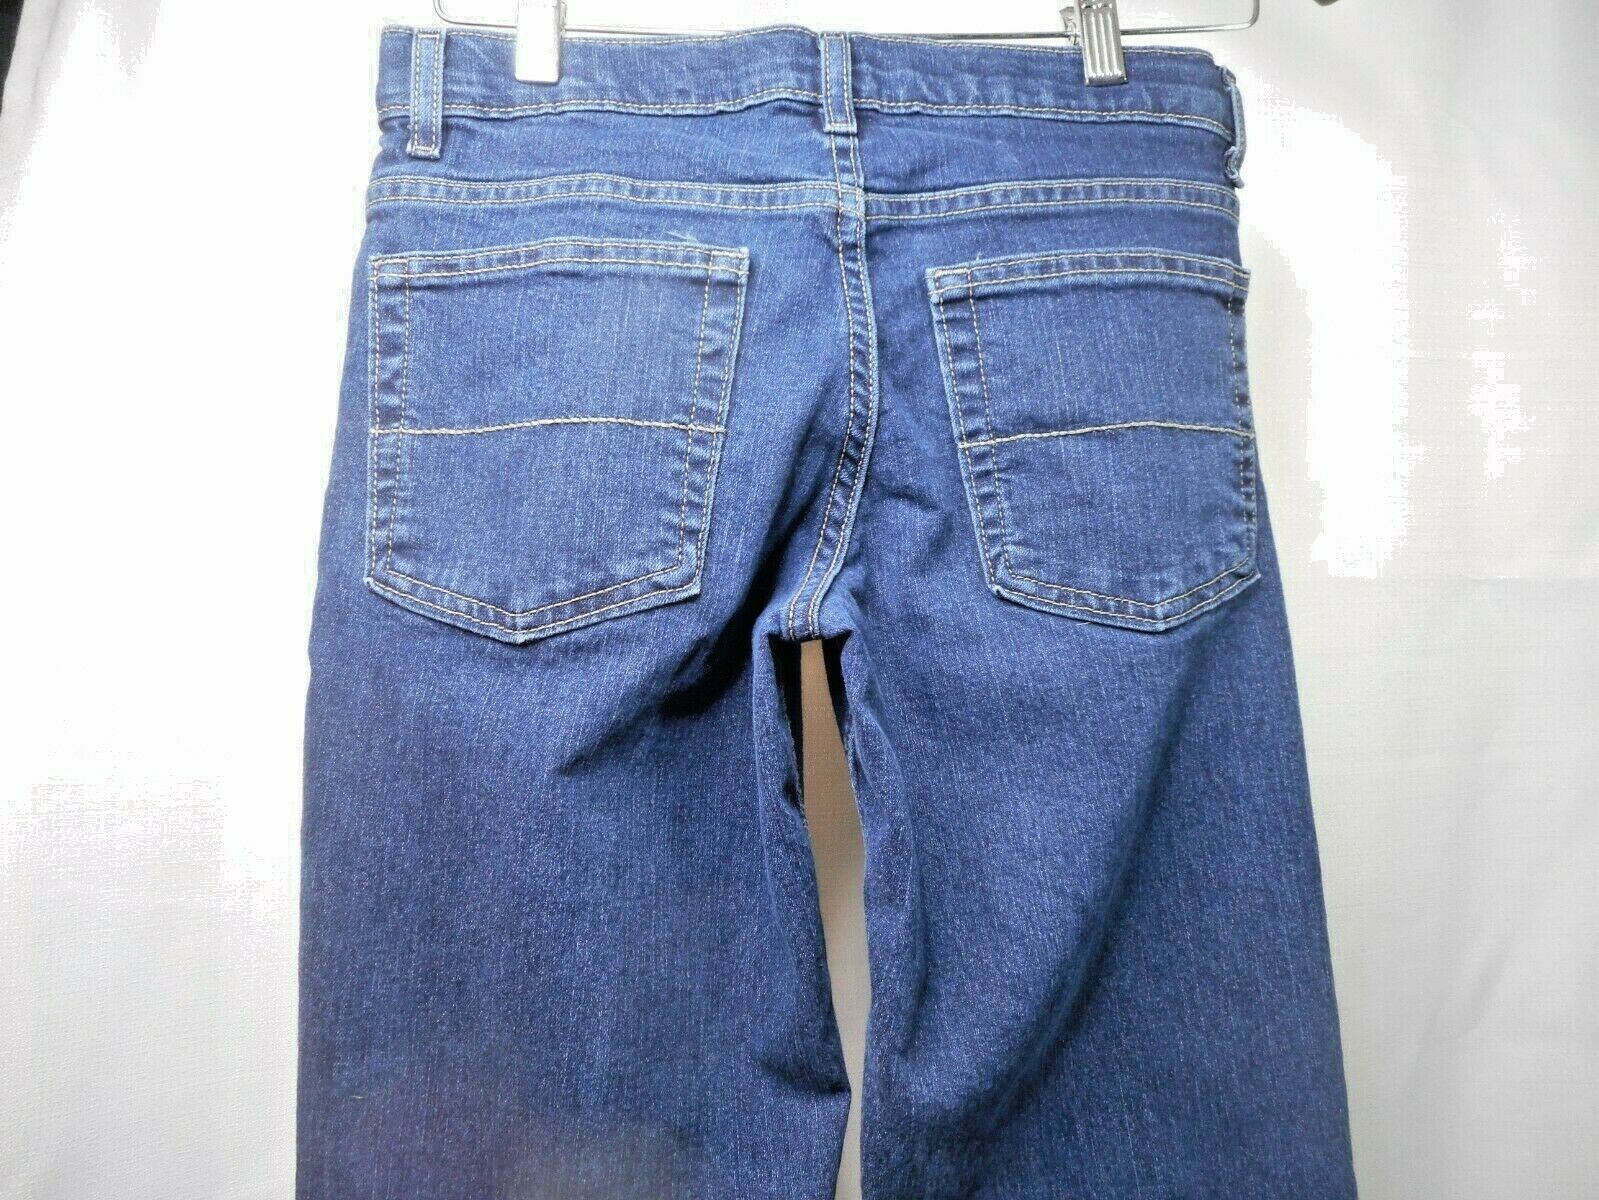 URBAN PIPELINE Ultimate Blue Jean Boys Size 14 Regular Straight Leg (28x27) EUC - $15.99